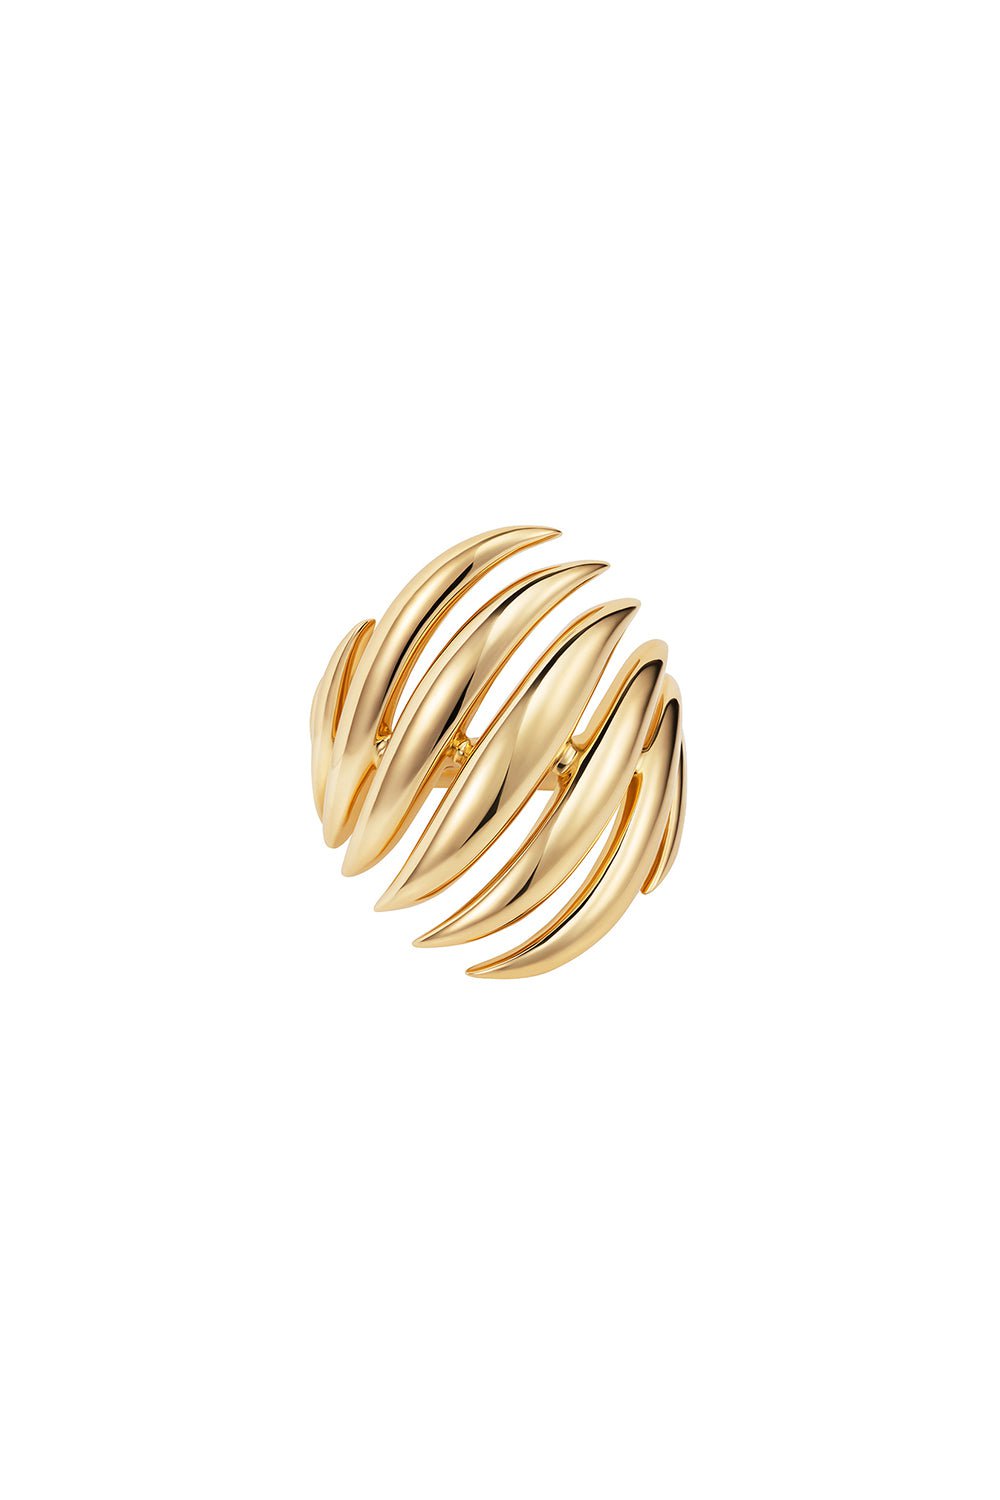 FERNANDO JORGE-Medium Flame Ring-YELLOW GOLD